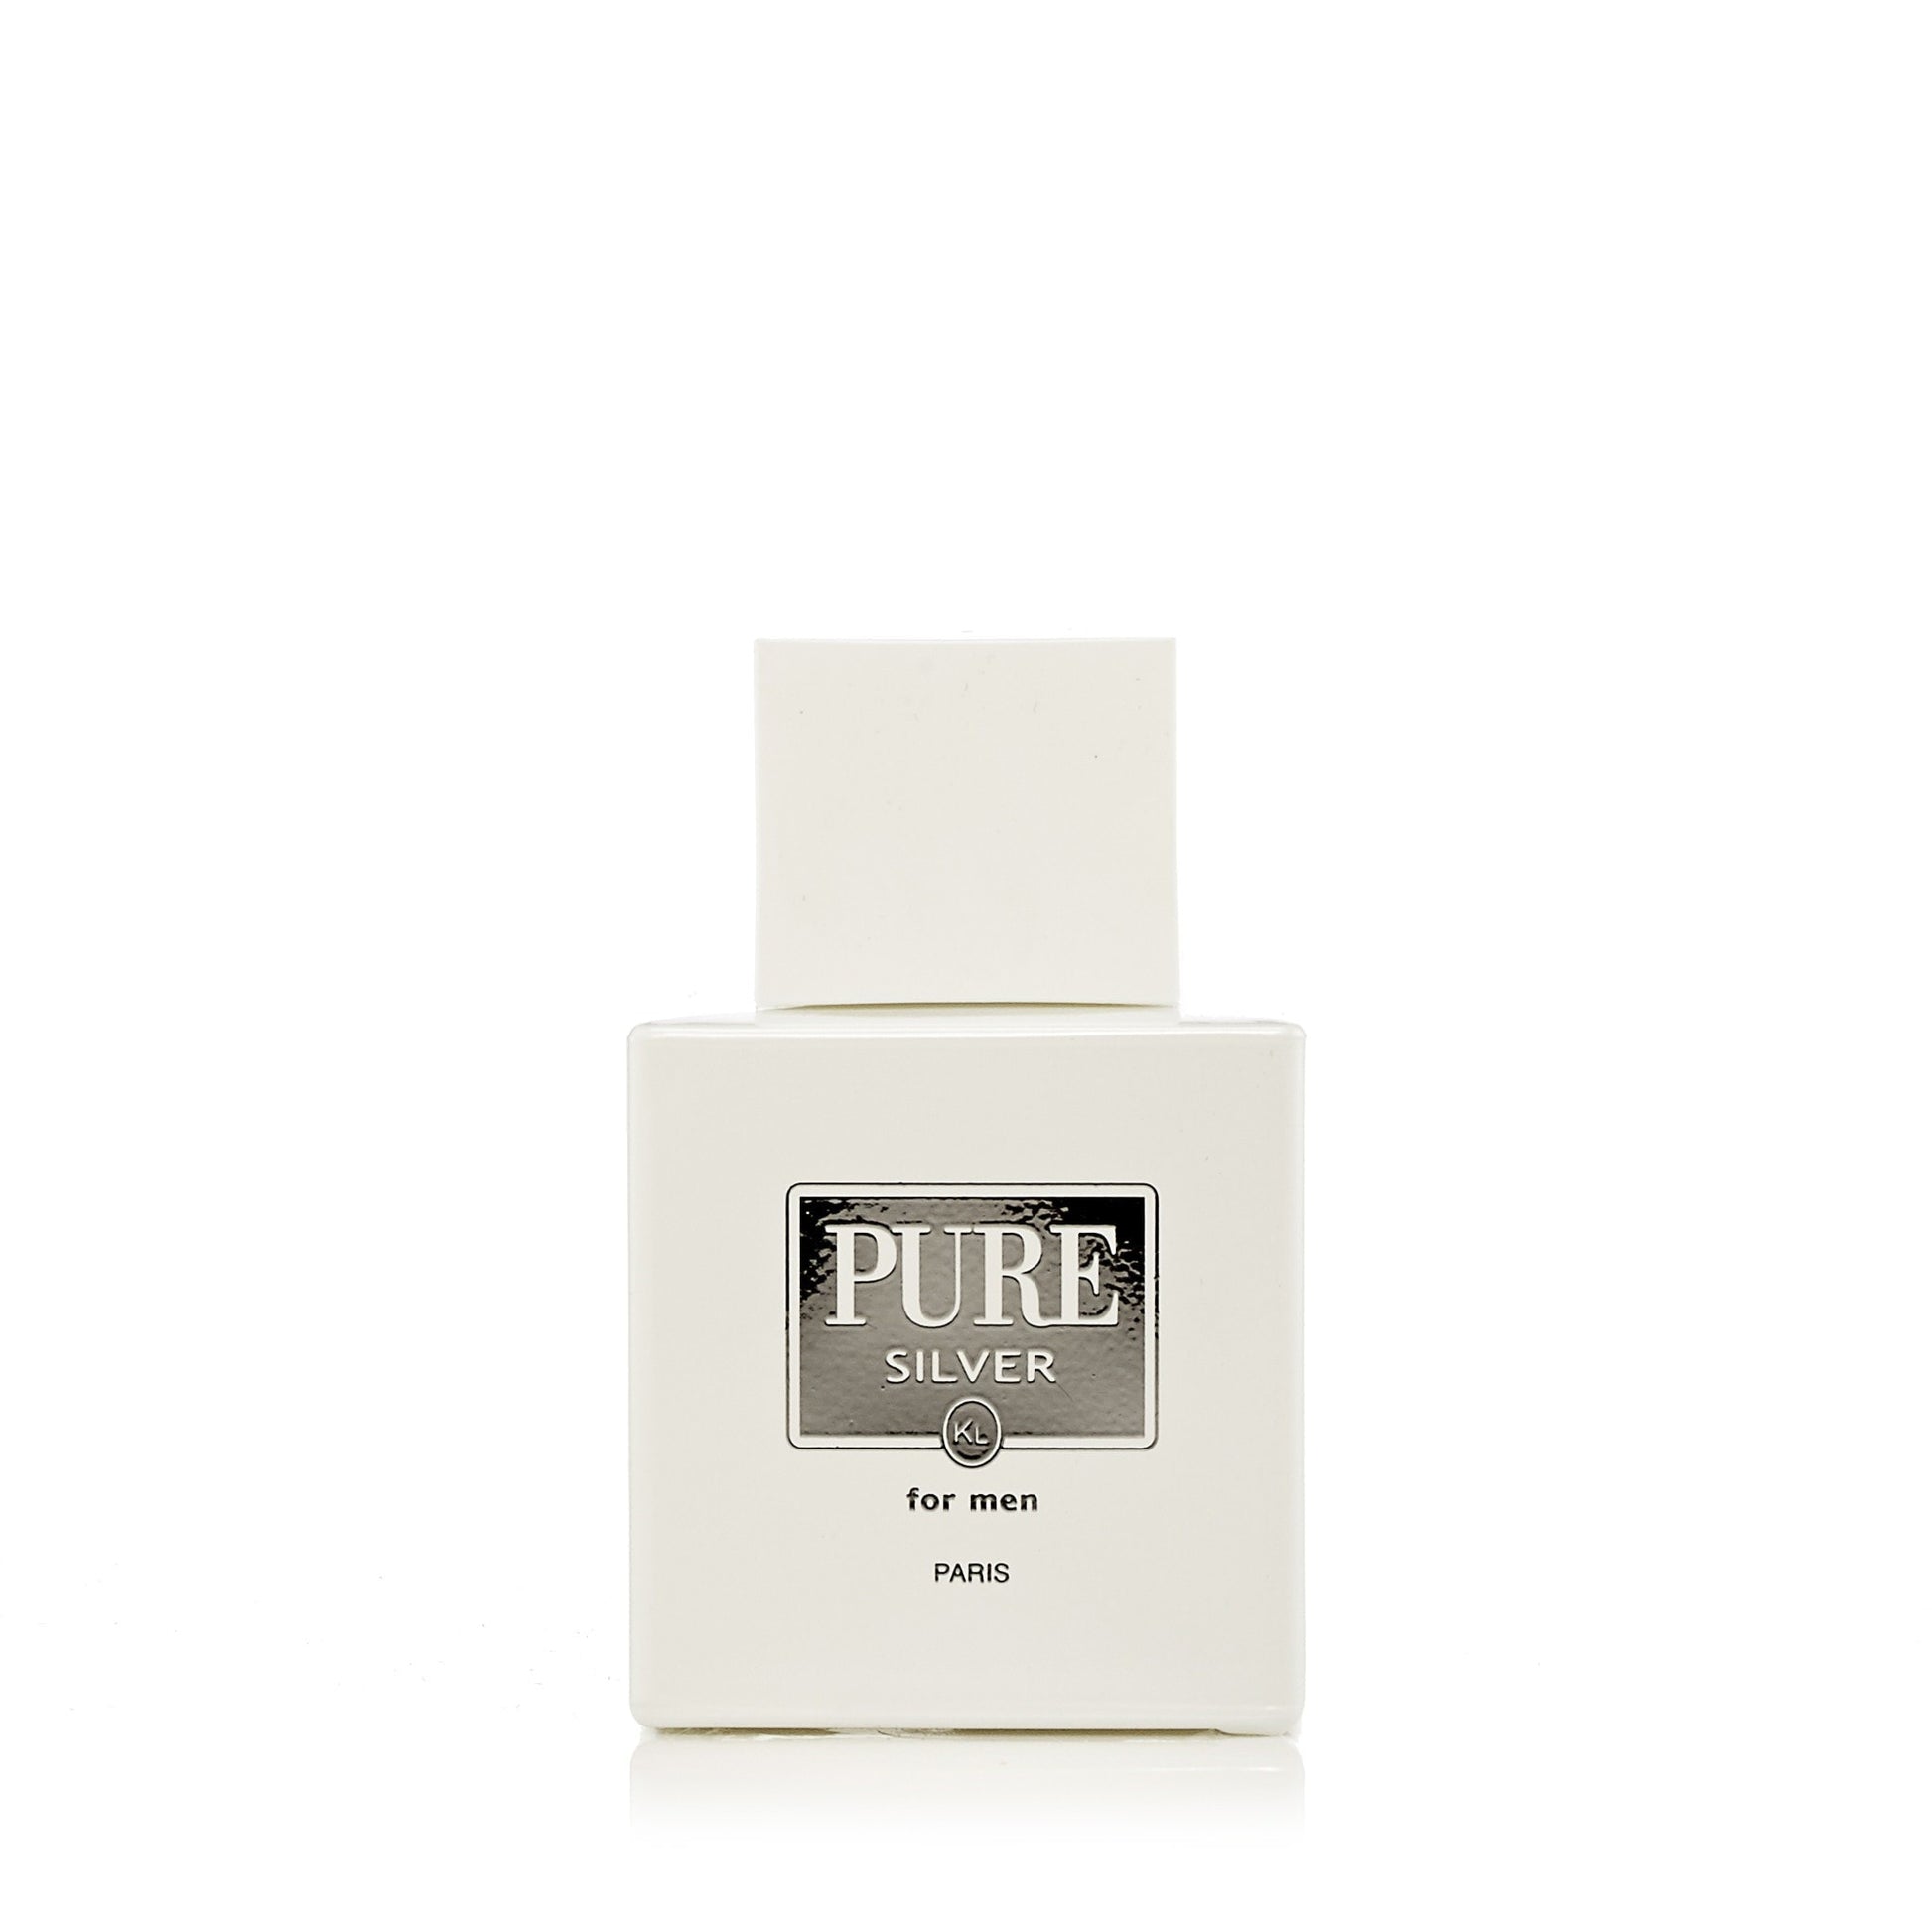 Pure Silver Eau de Toilette Spray for Men 3.4 oz. Click to open in modal